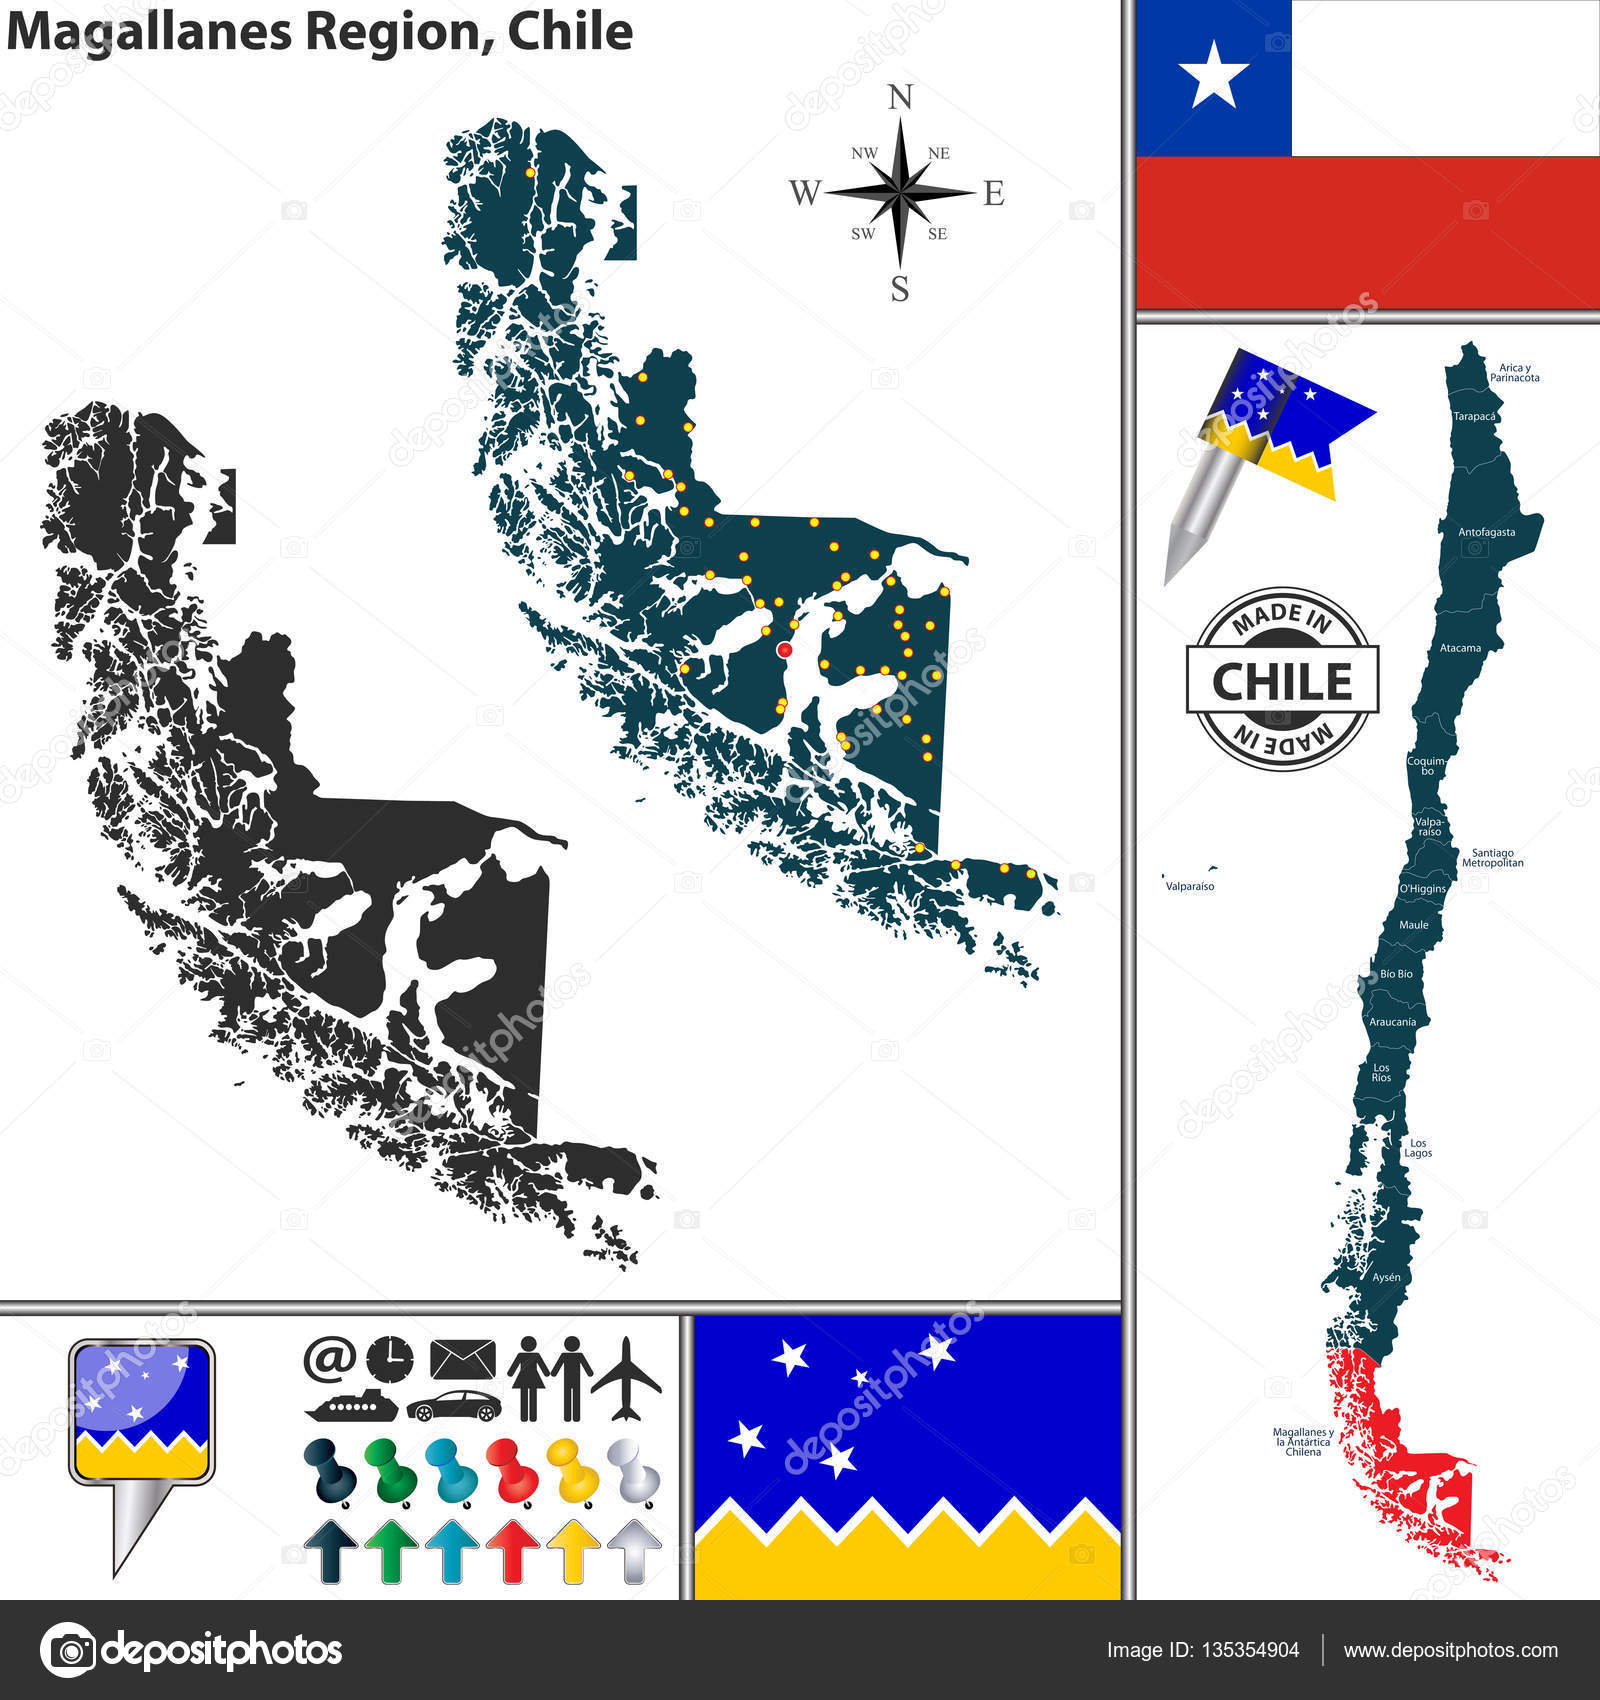 depositphotos_135354904-stock-illustration-map-of-magallanes-chile.jpg